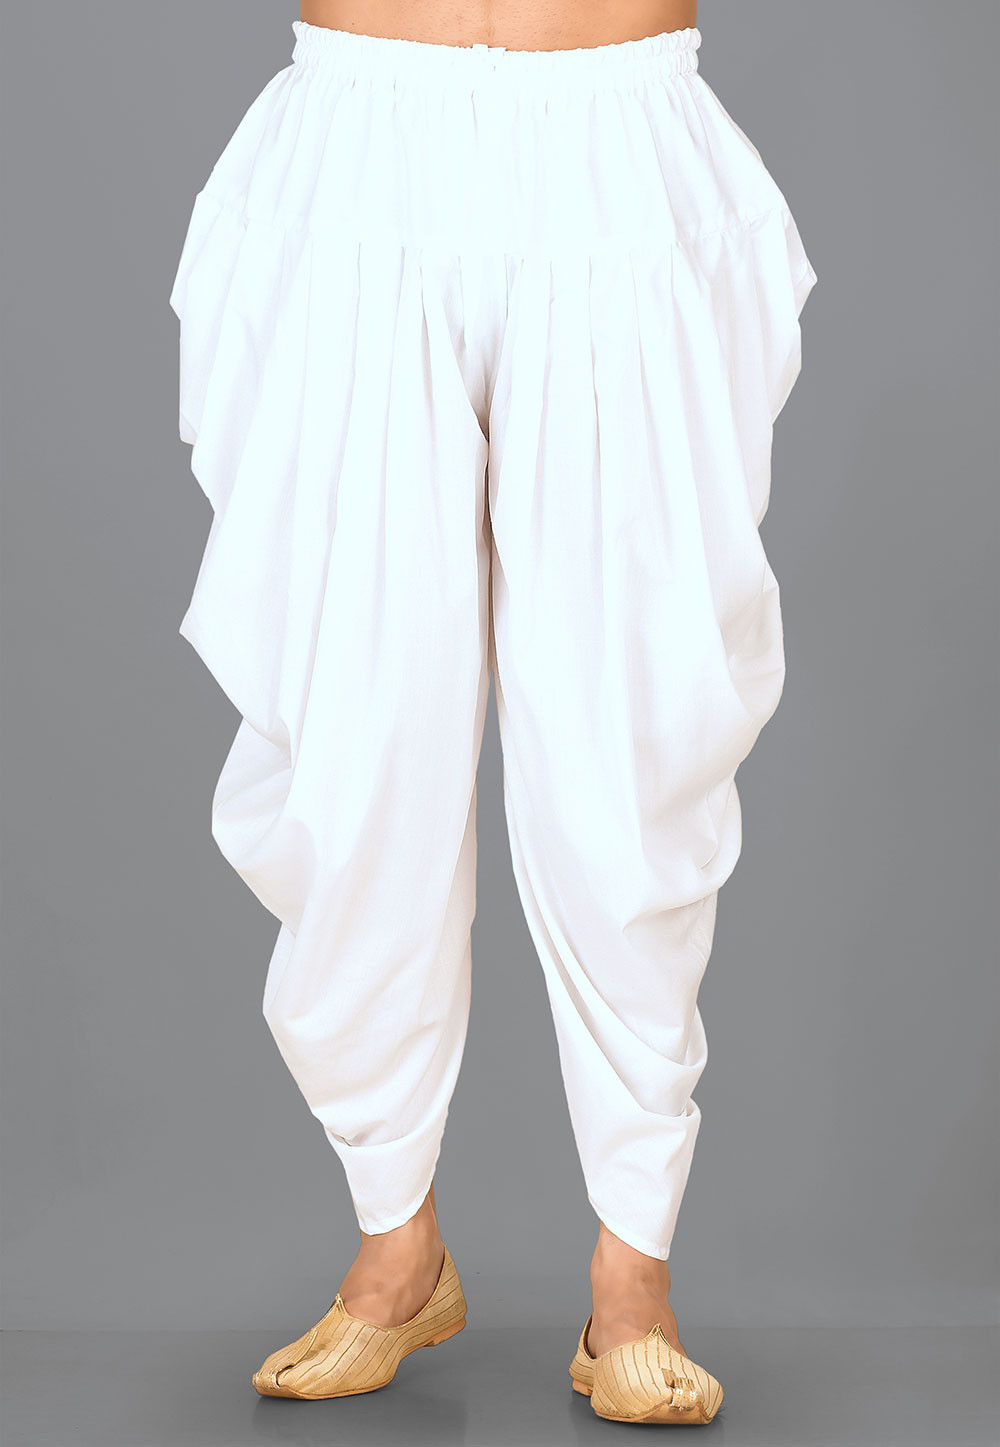 Pleated Pantsant lyester White Dhoti Pant Free Size